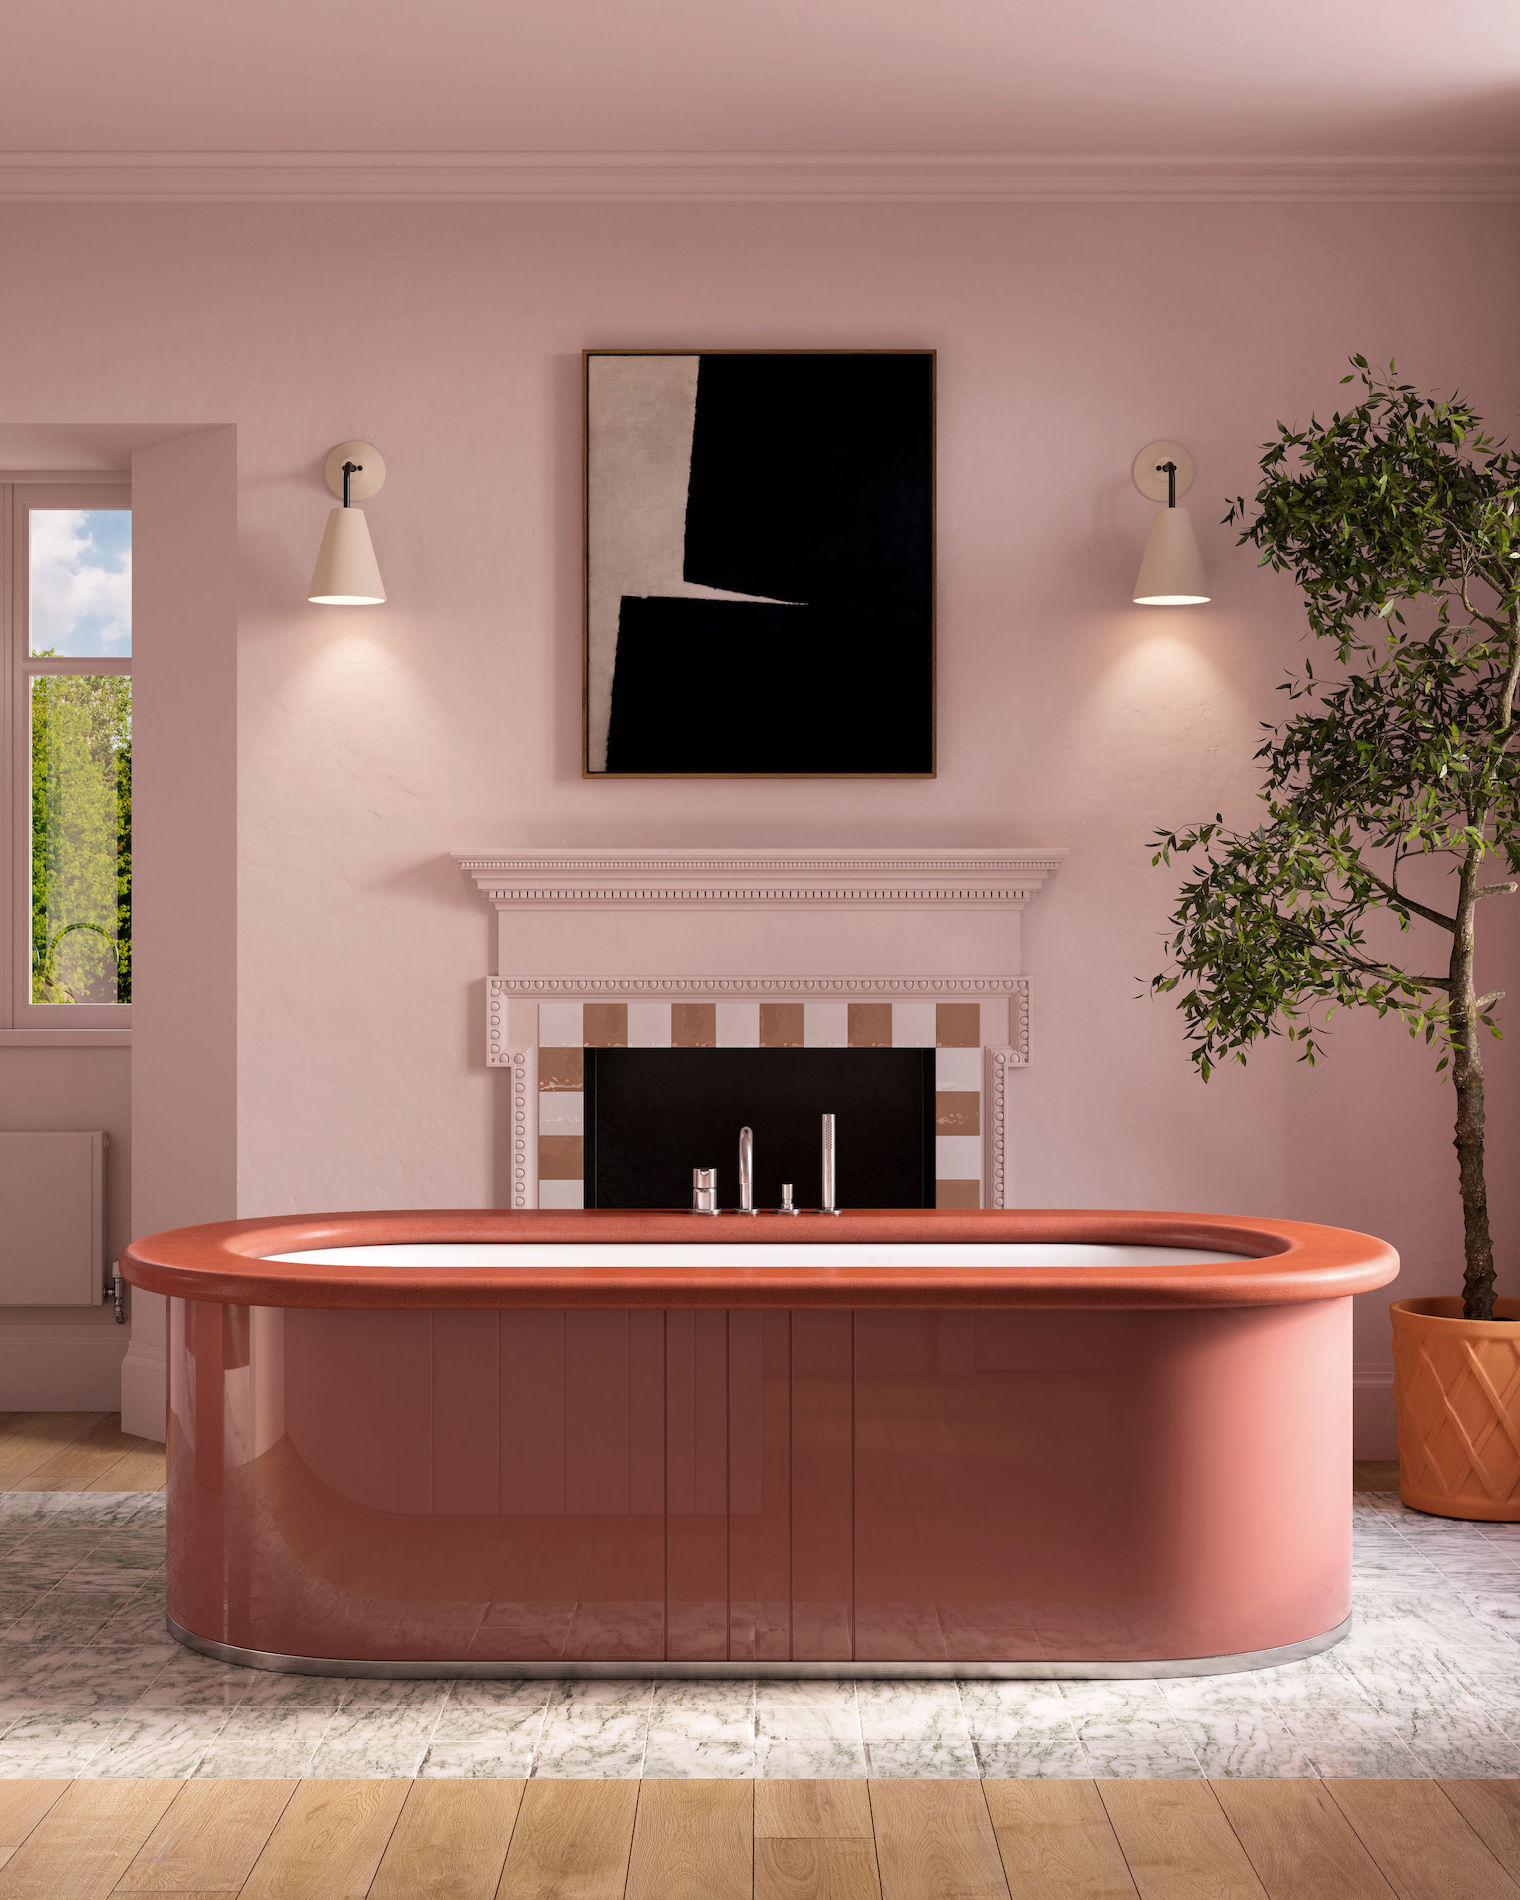 Bathroom at Cowley Manor Experimental design hotel by interior designer Dorothée Meilichzon in Effect Magazine